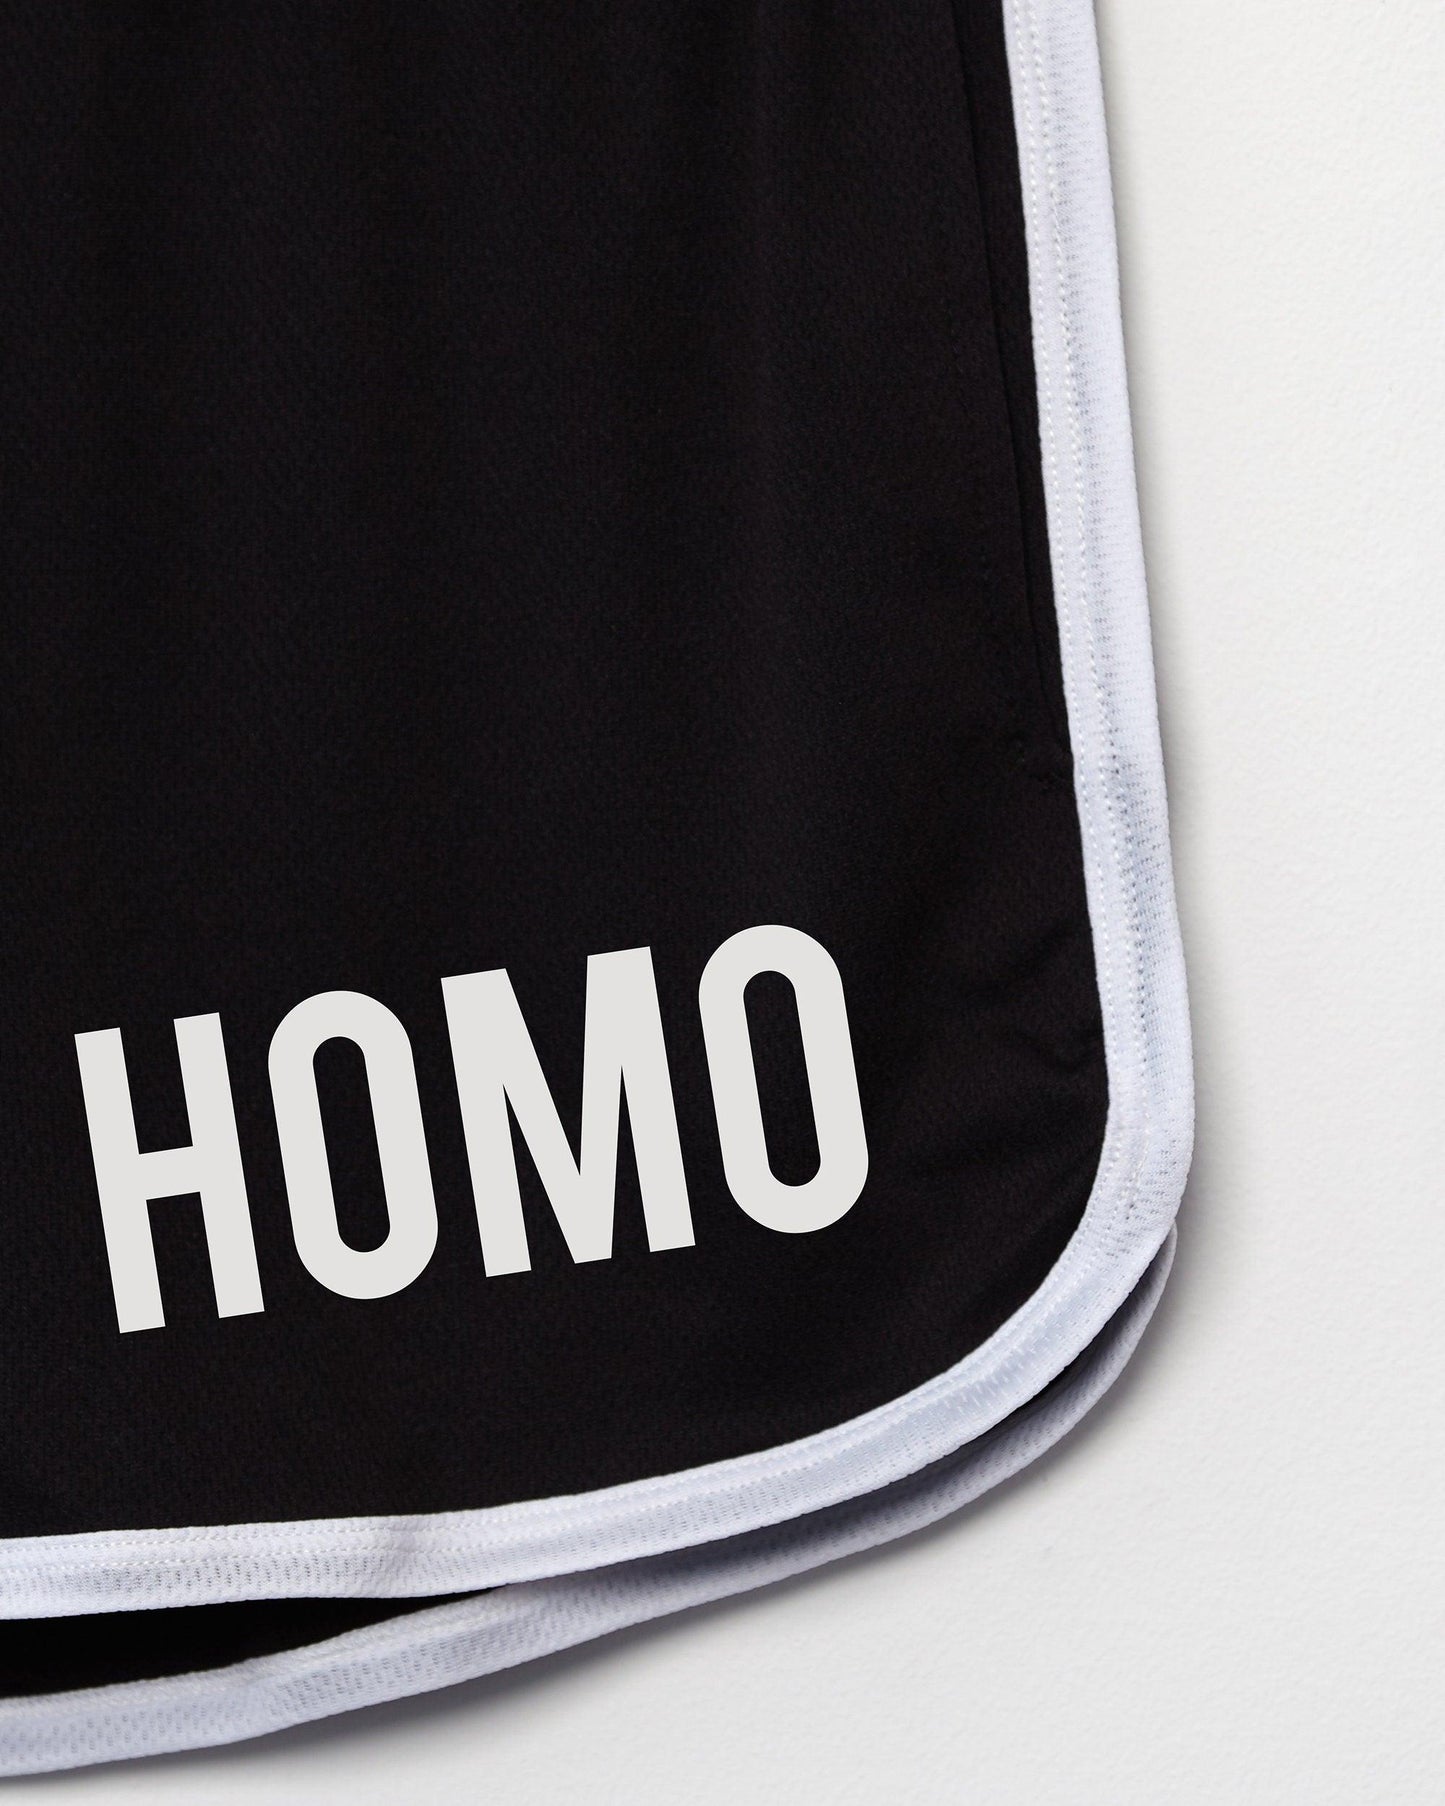 HOMO, Black & White - Short Shorts